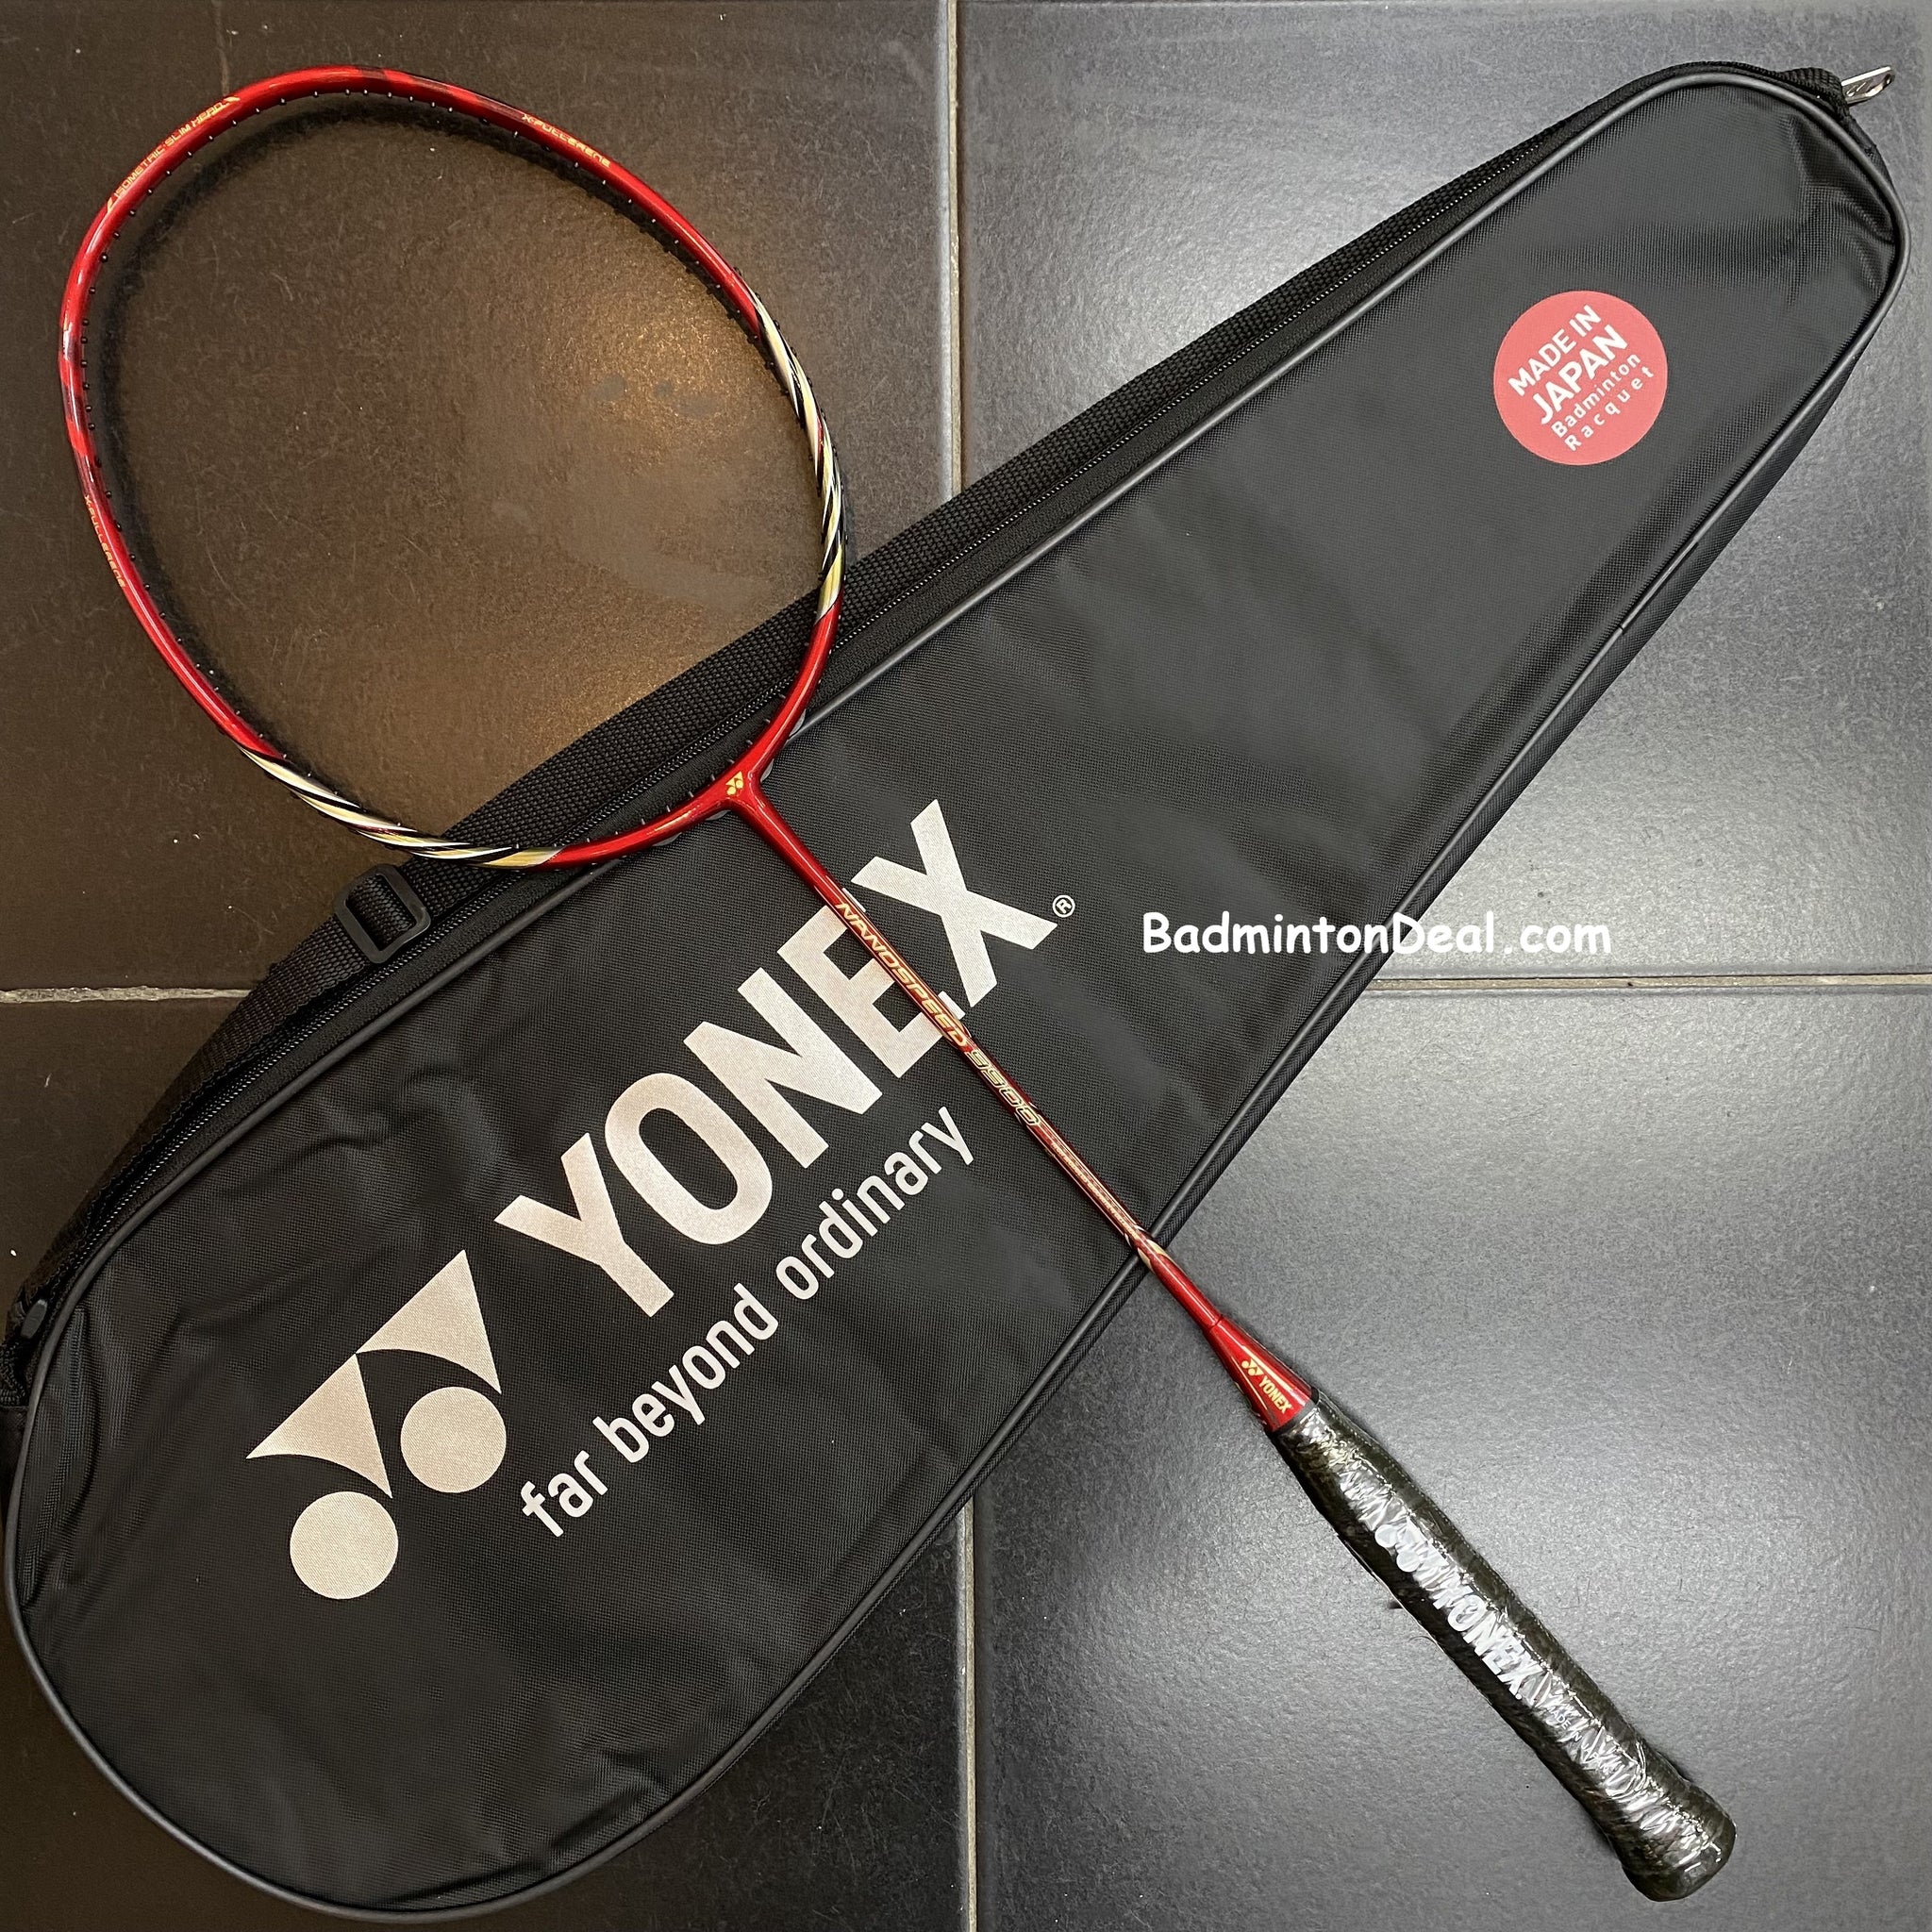 YONEX NANOSPEED 9900 NS9900 Racquet (2019 New Color Red/Gold